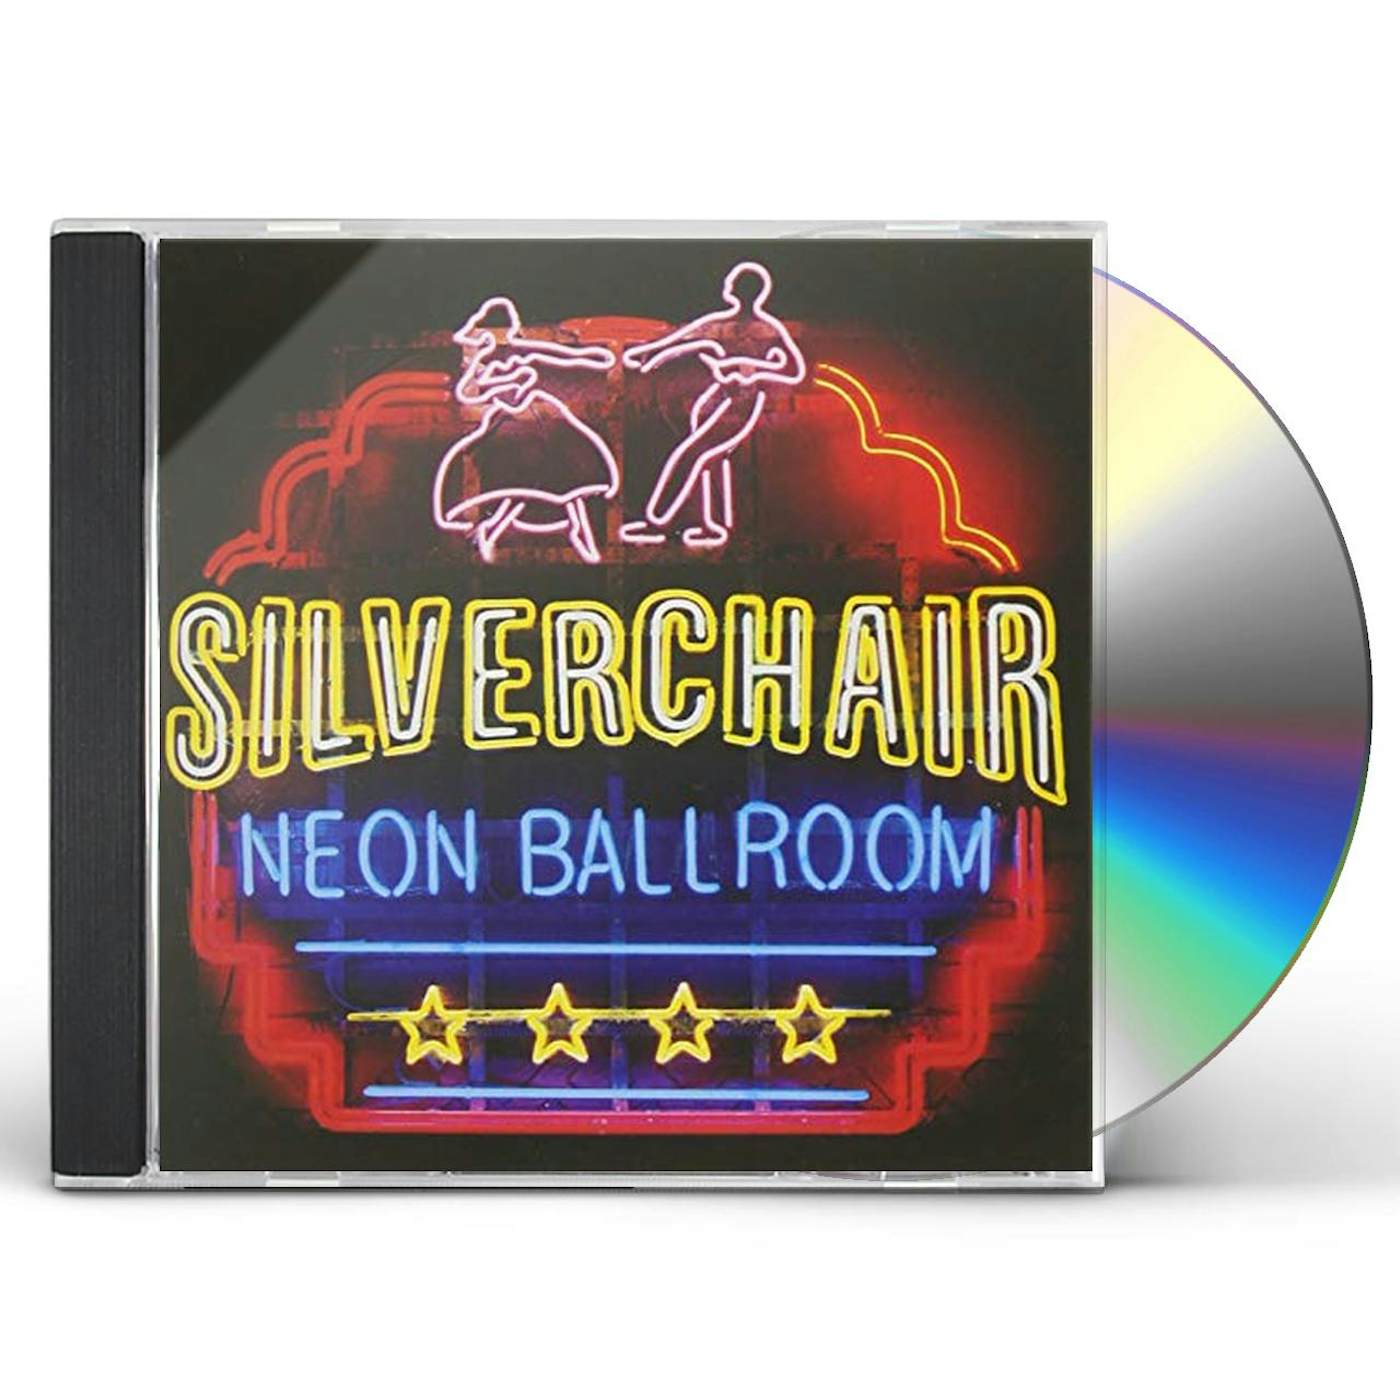 Silverchair NEON BALLROOM (GOLD SERIES) CD